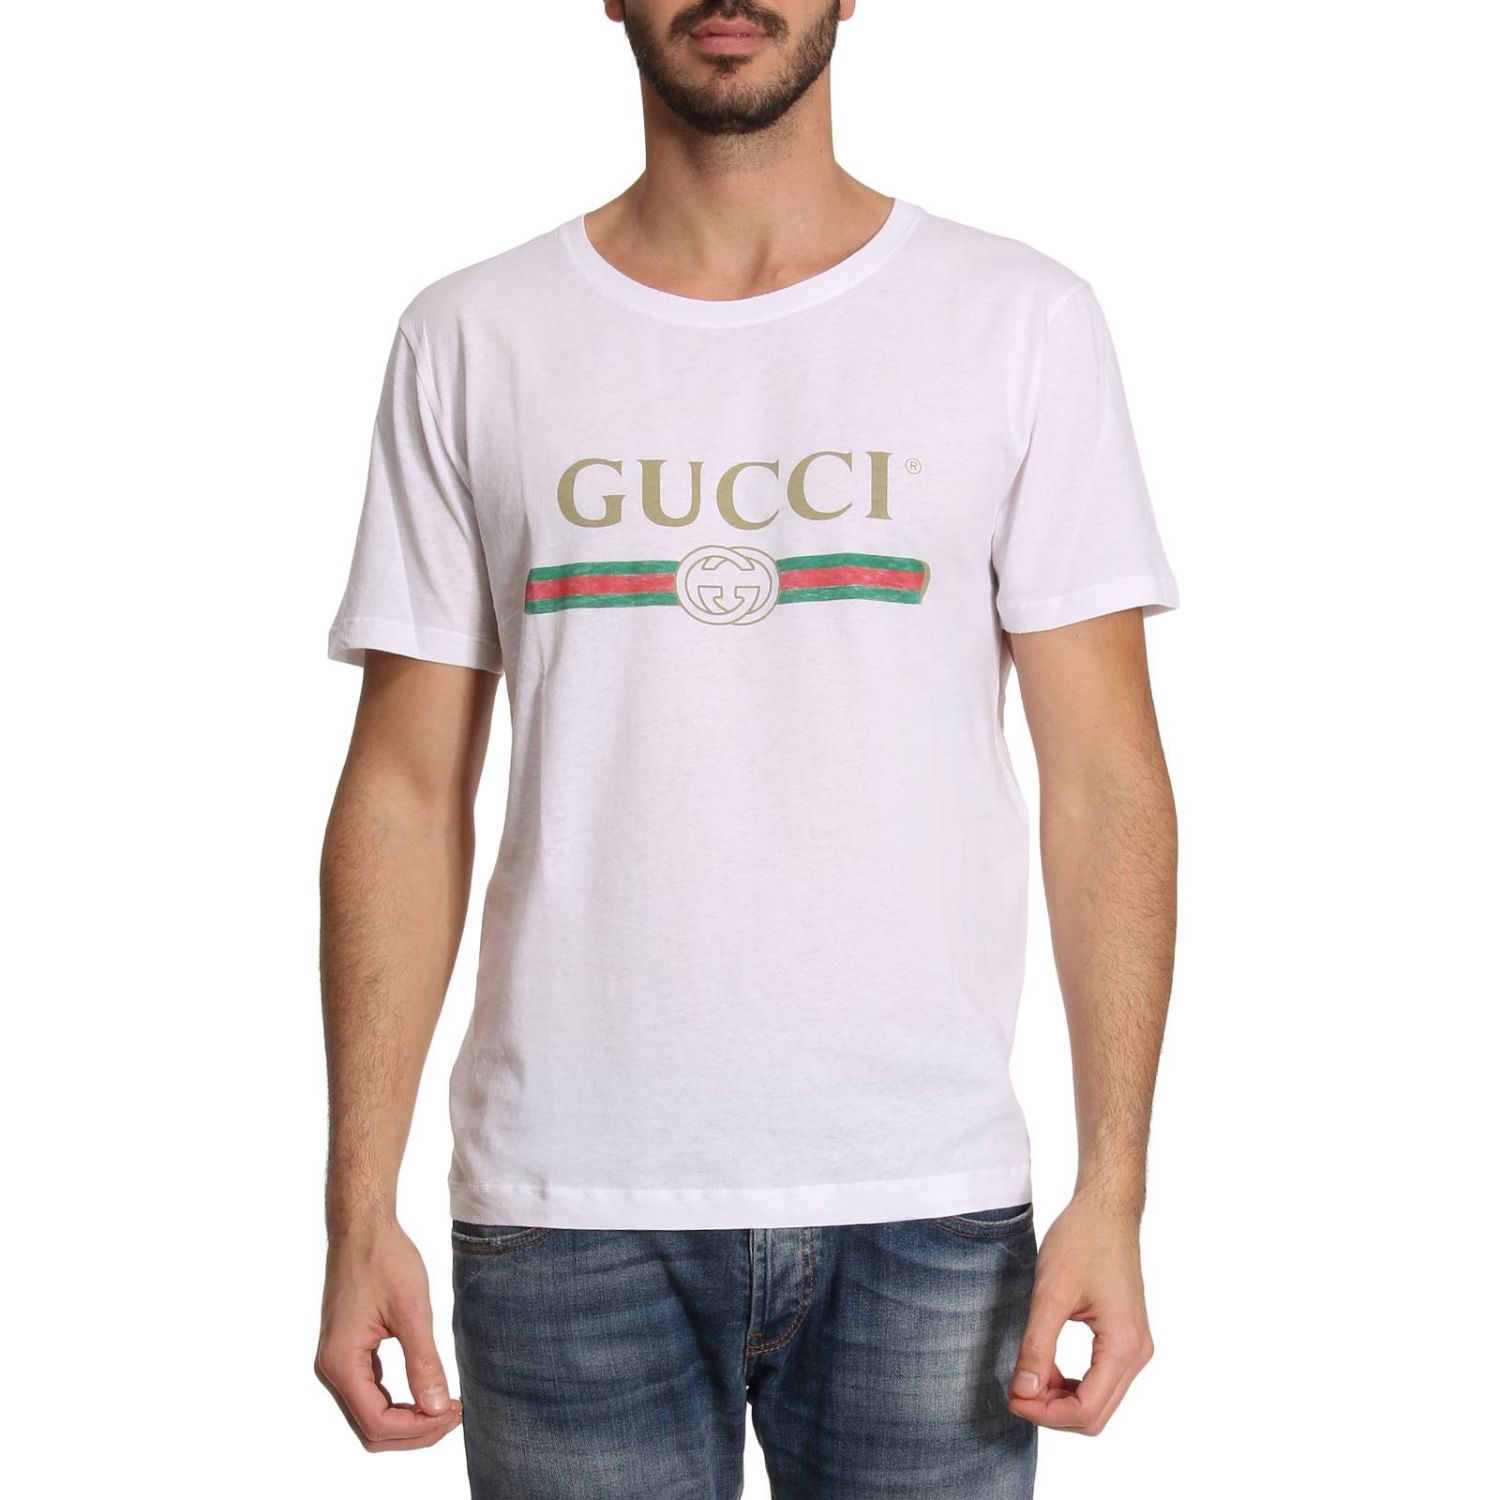 GUCCI: T-shirt men | T-Shirt Gucci Men White | T-Shirt Gucci 440103 ...